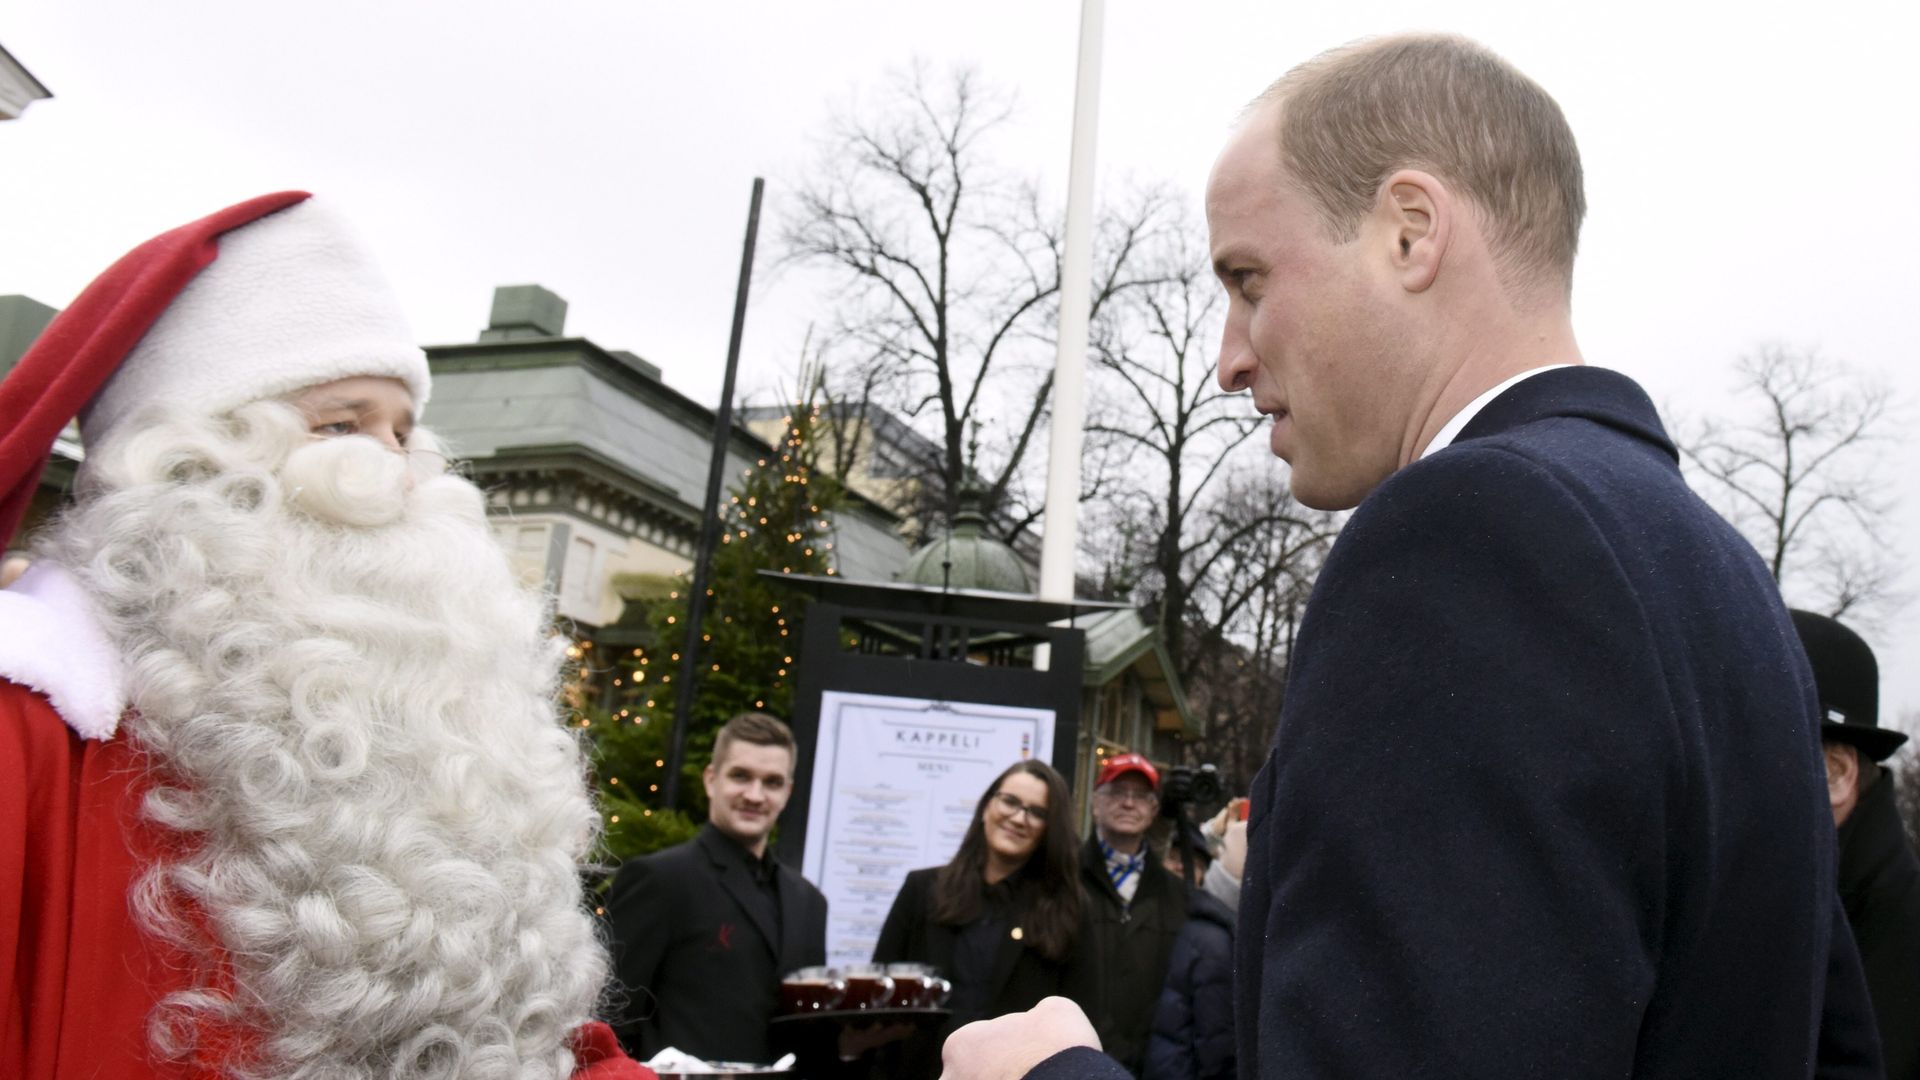 Prince William meets Santa Claus in Helsinki
